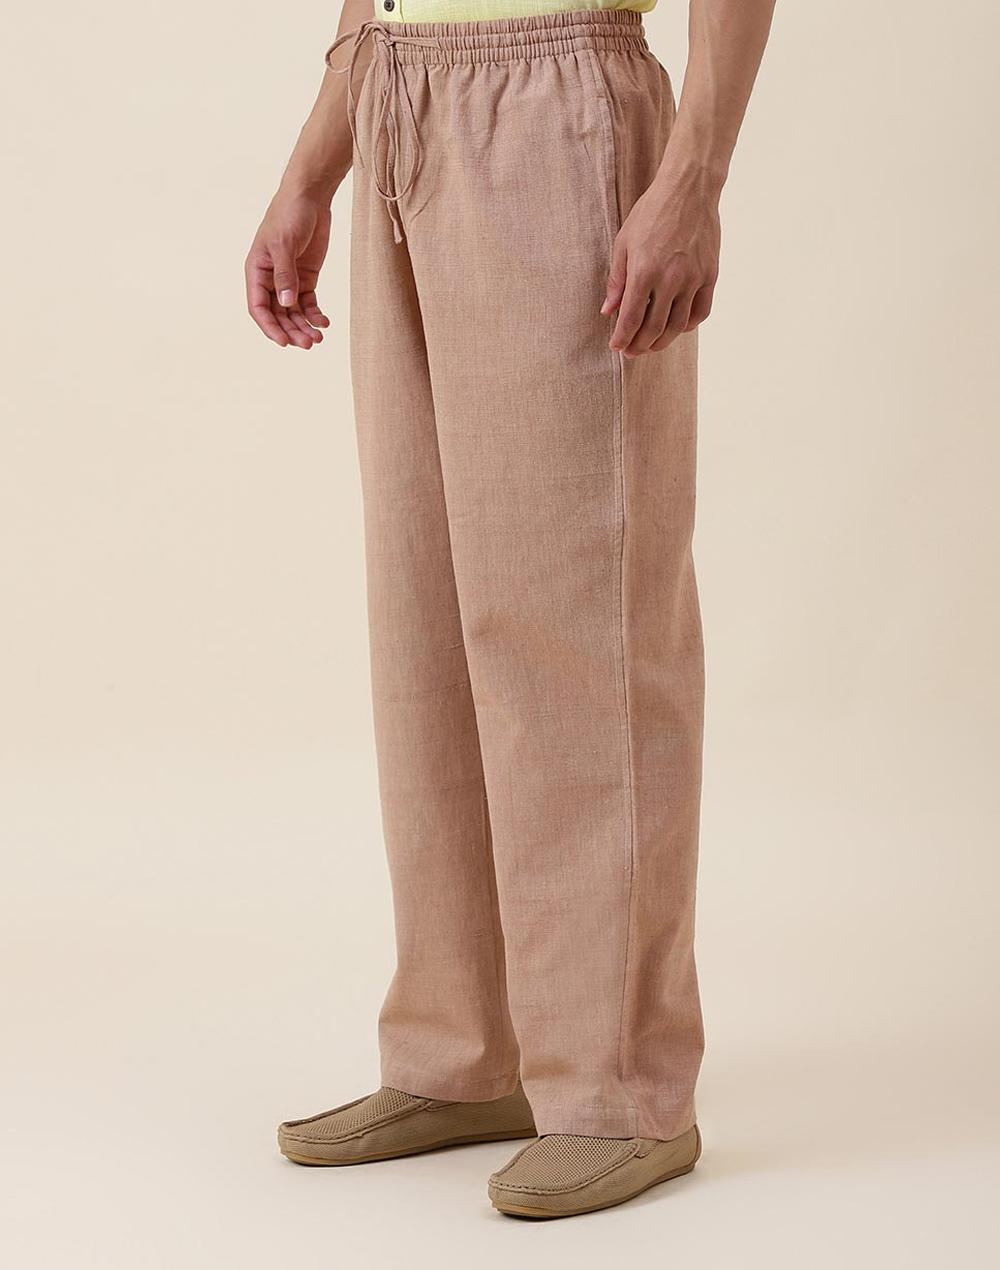 beige cotton full length drawstring pants